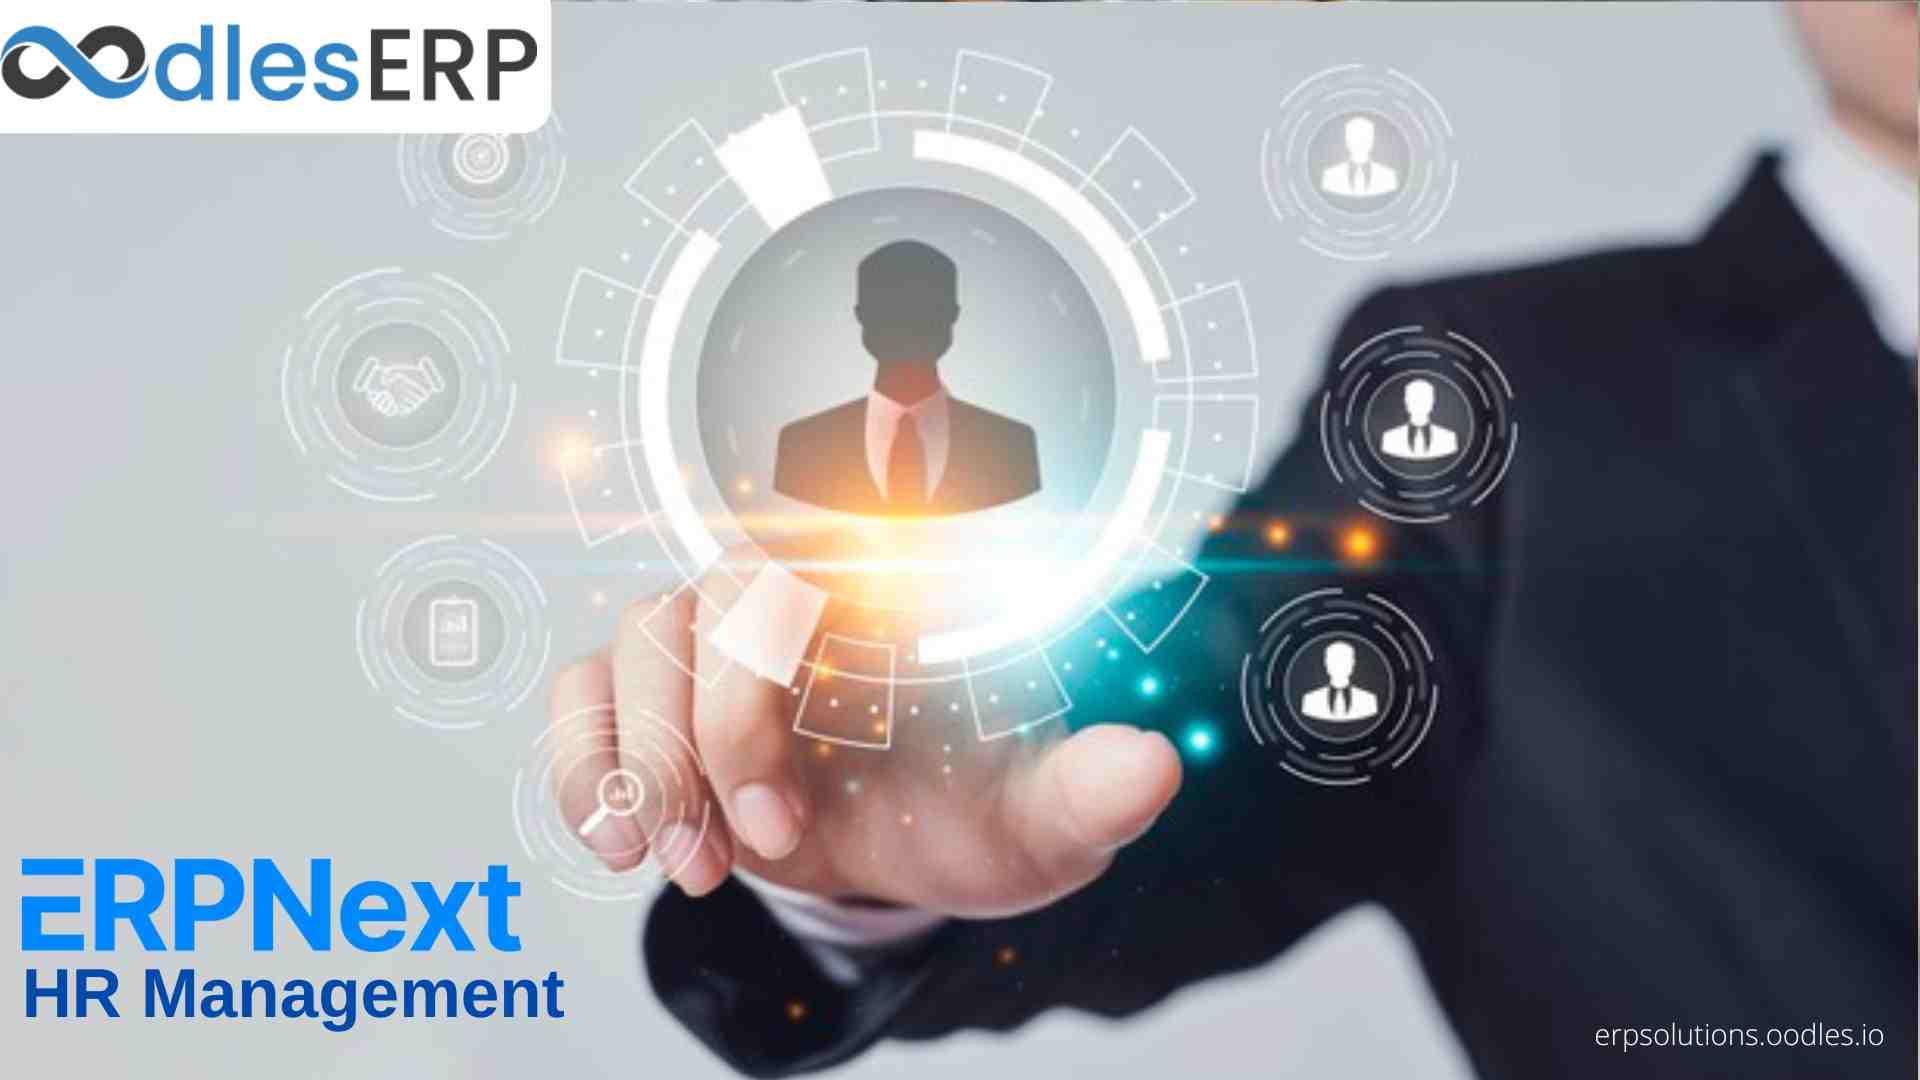 ERPNext software solutions for human resource management